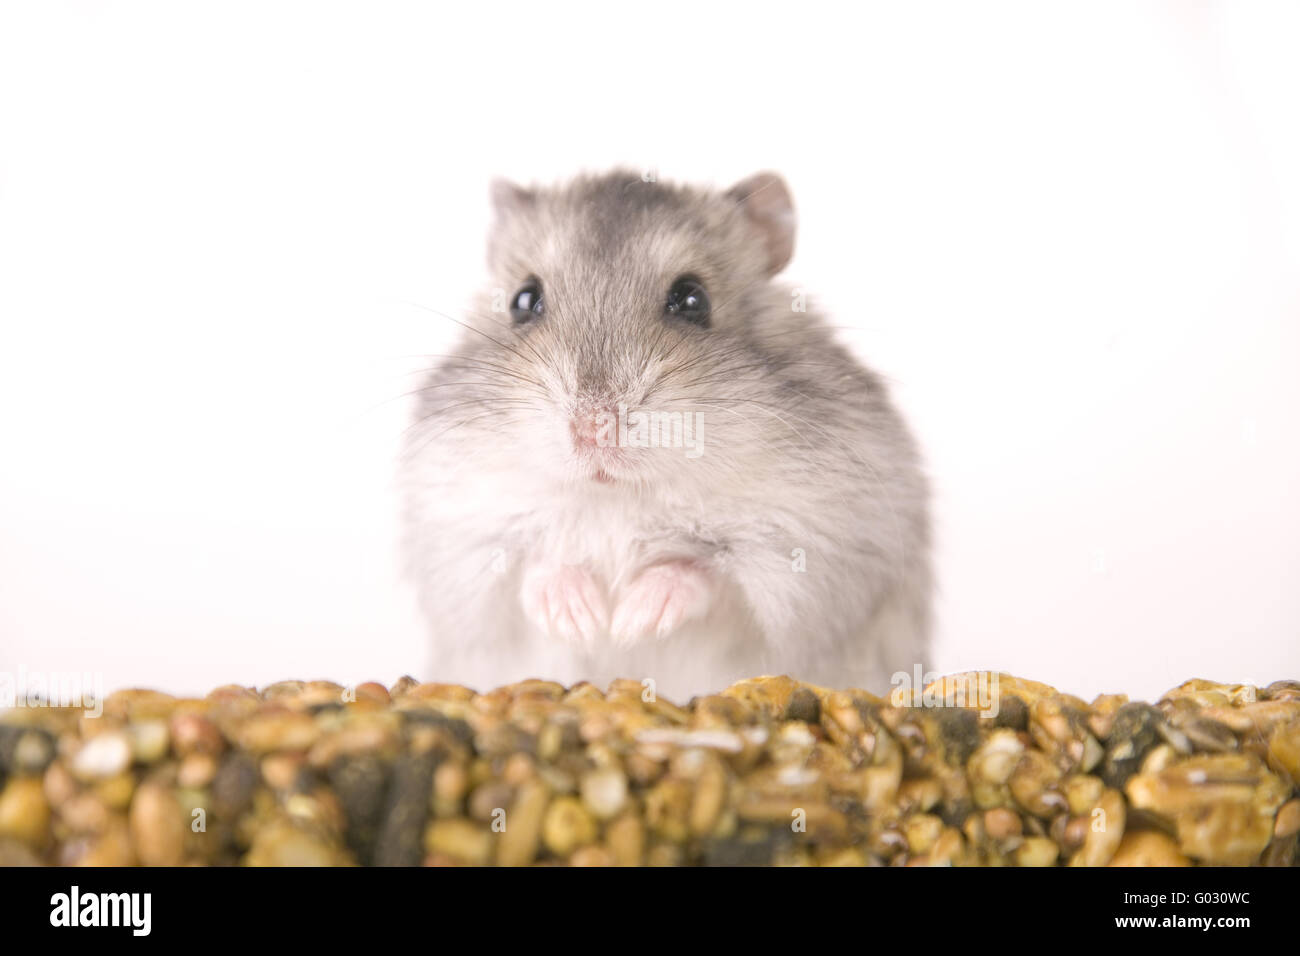 Golden hamster ingestion of food Stock Photo